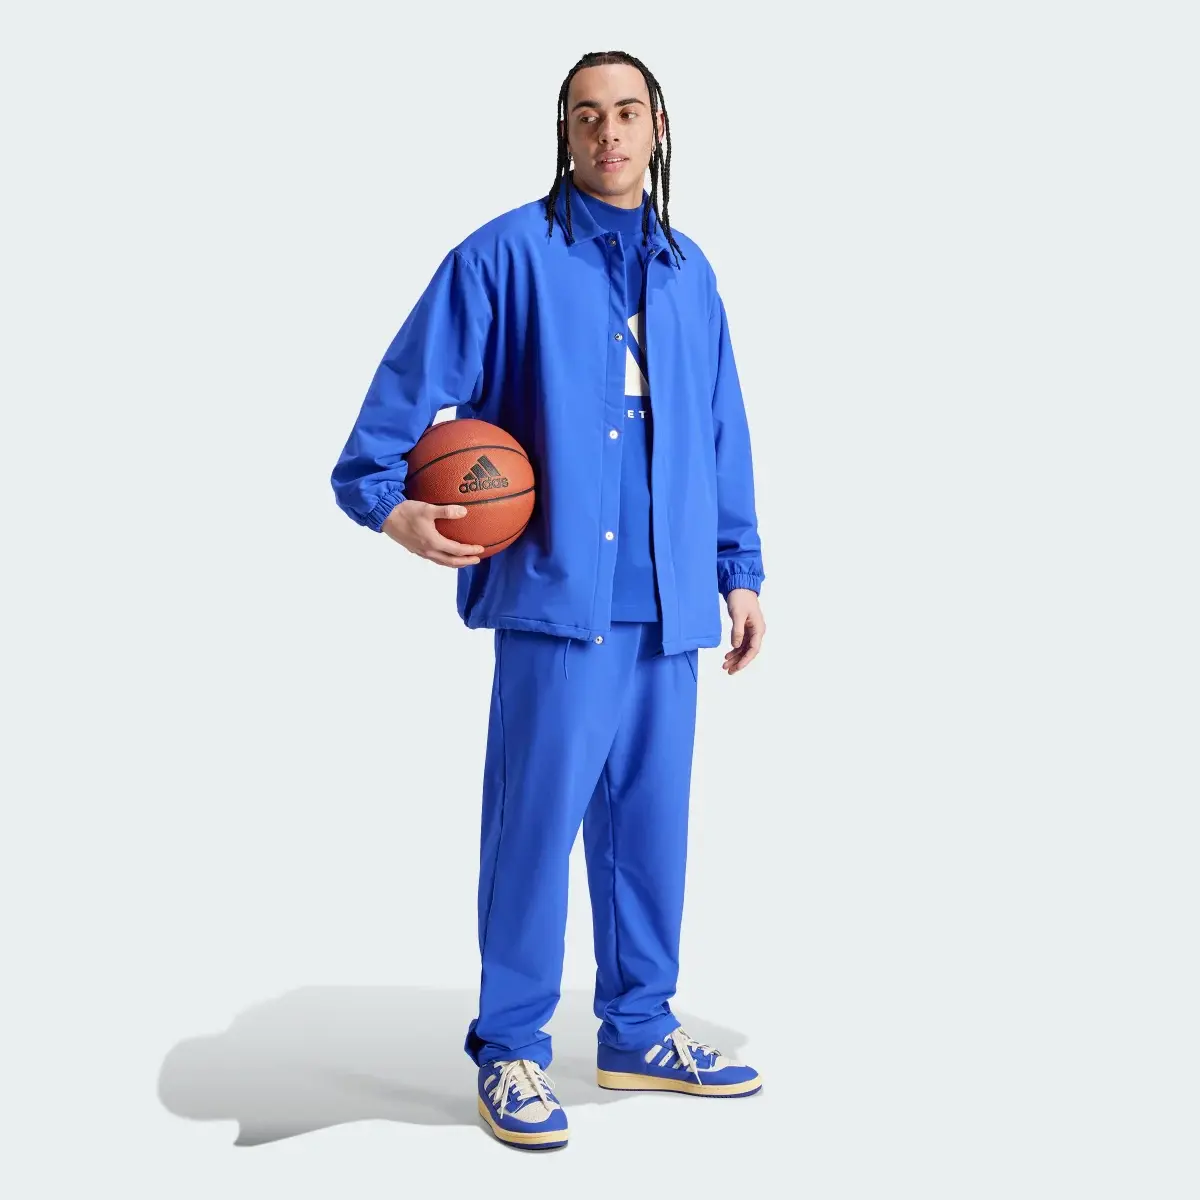 Adidas Pantaloni adidas Basketball Snap. 3